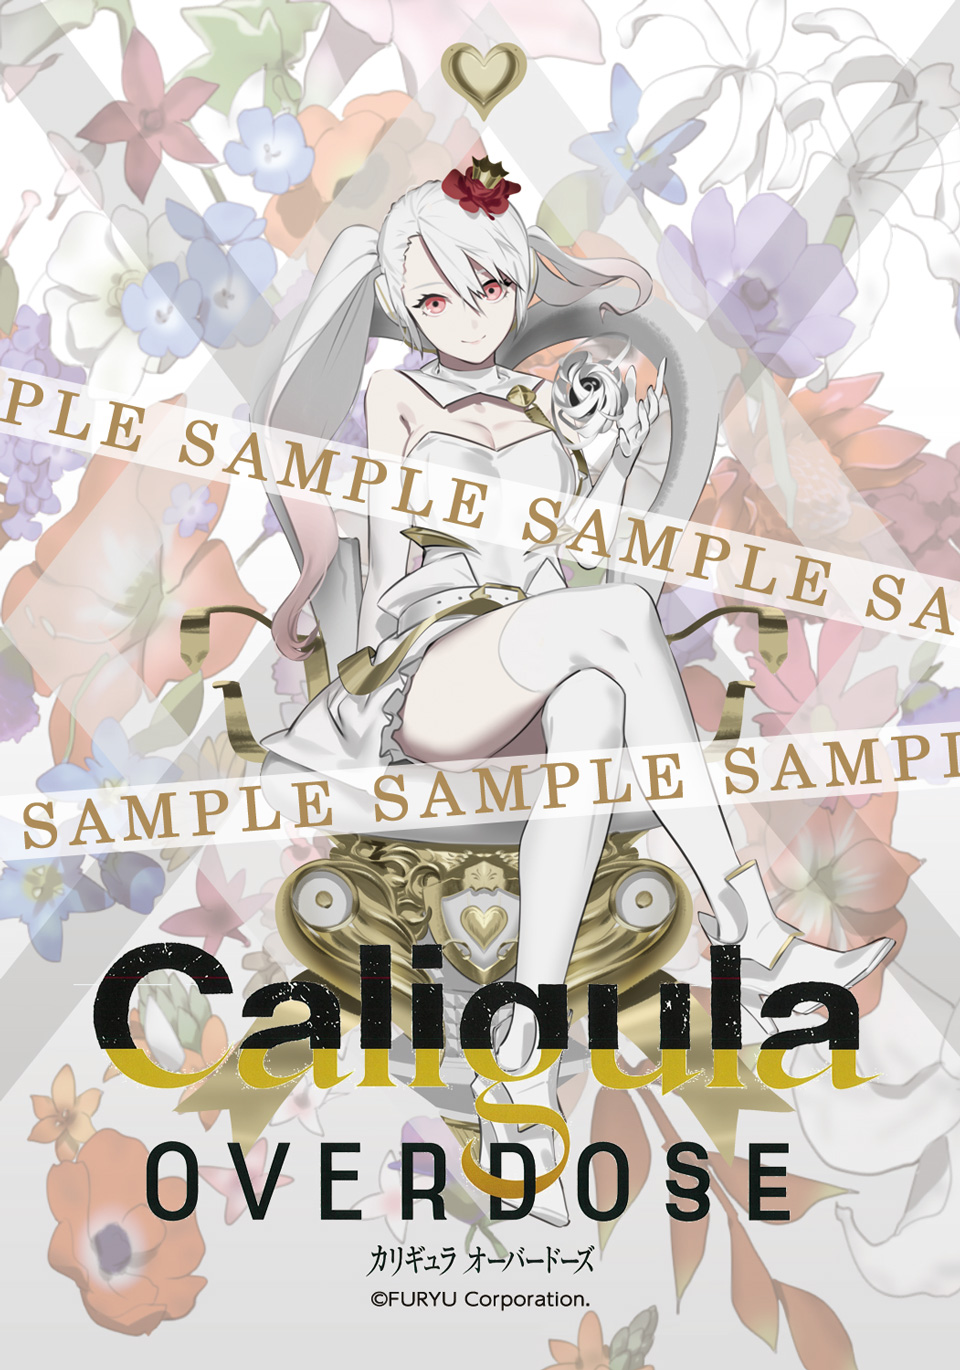 Caligula Overdose -カリギュラ オーバードーズ-」NintendoSwitch版 